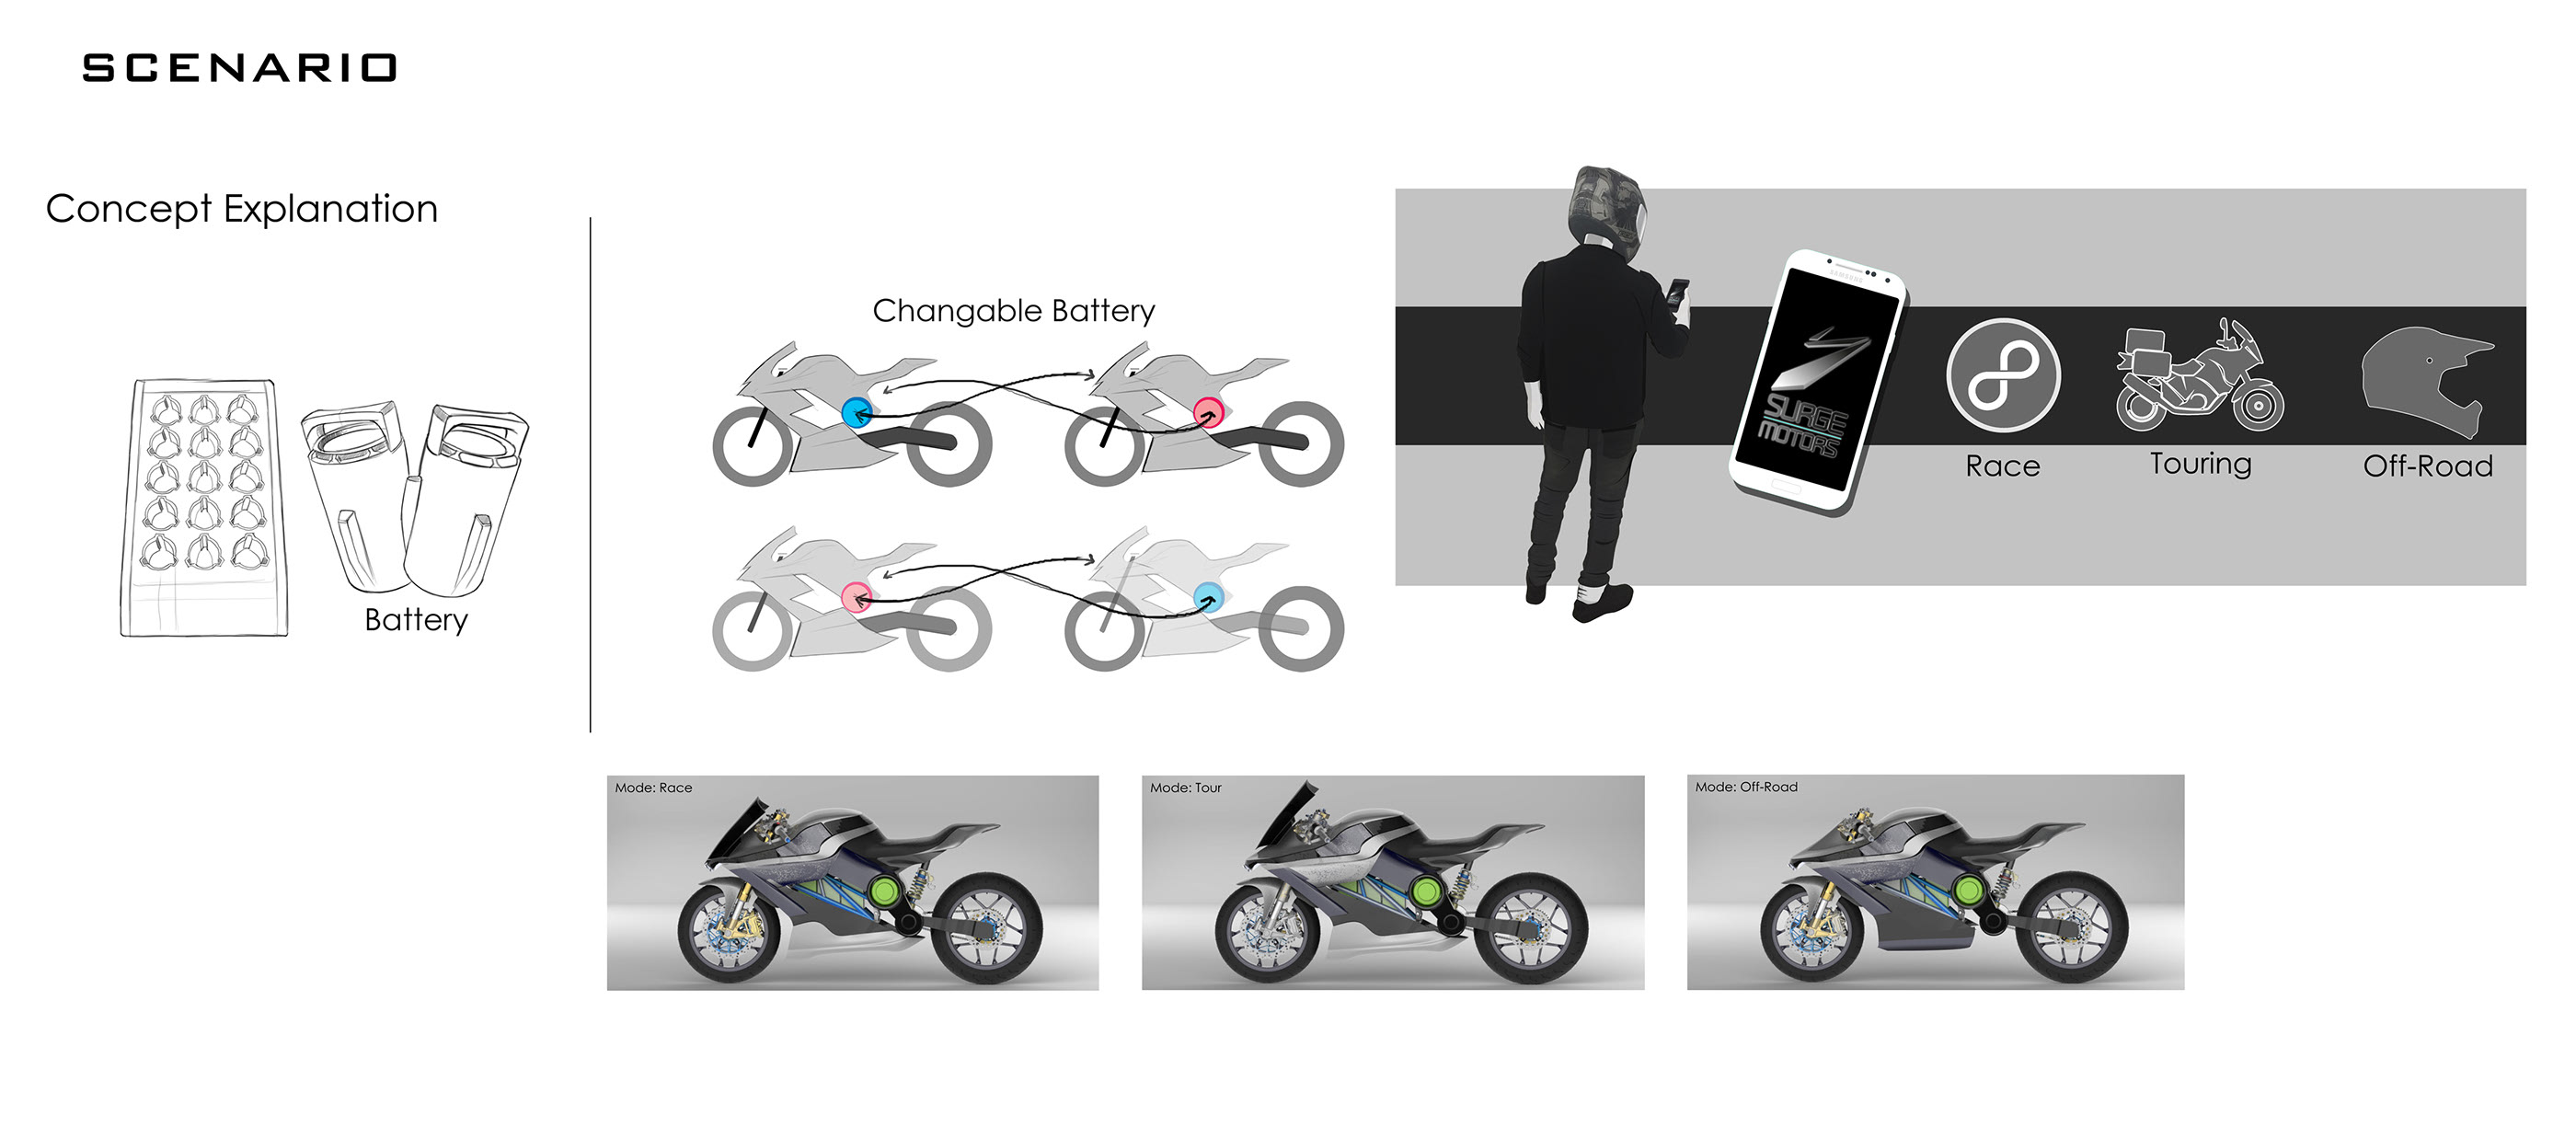 Motorcycle Design Portfolio 2018 on Behance